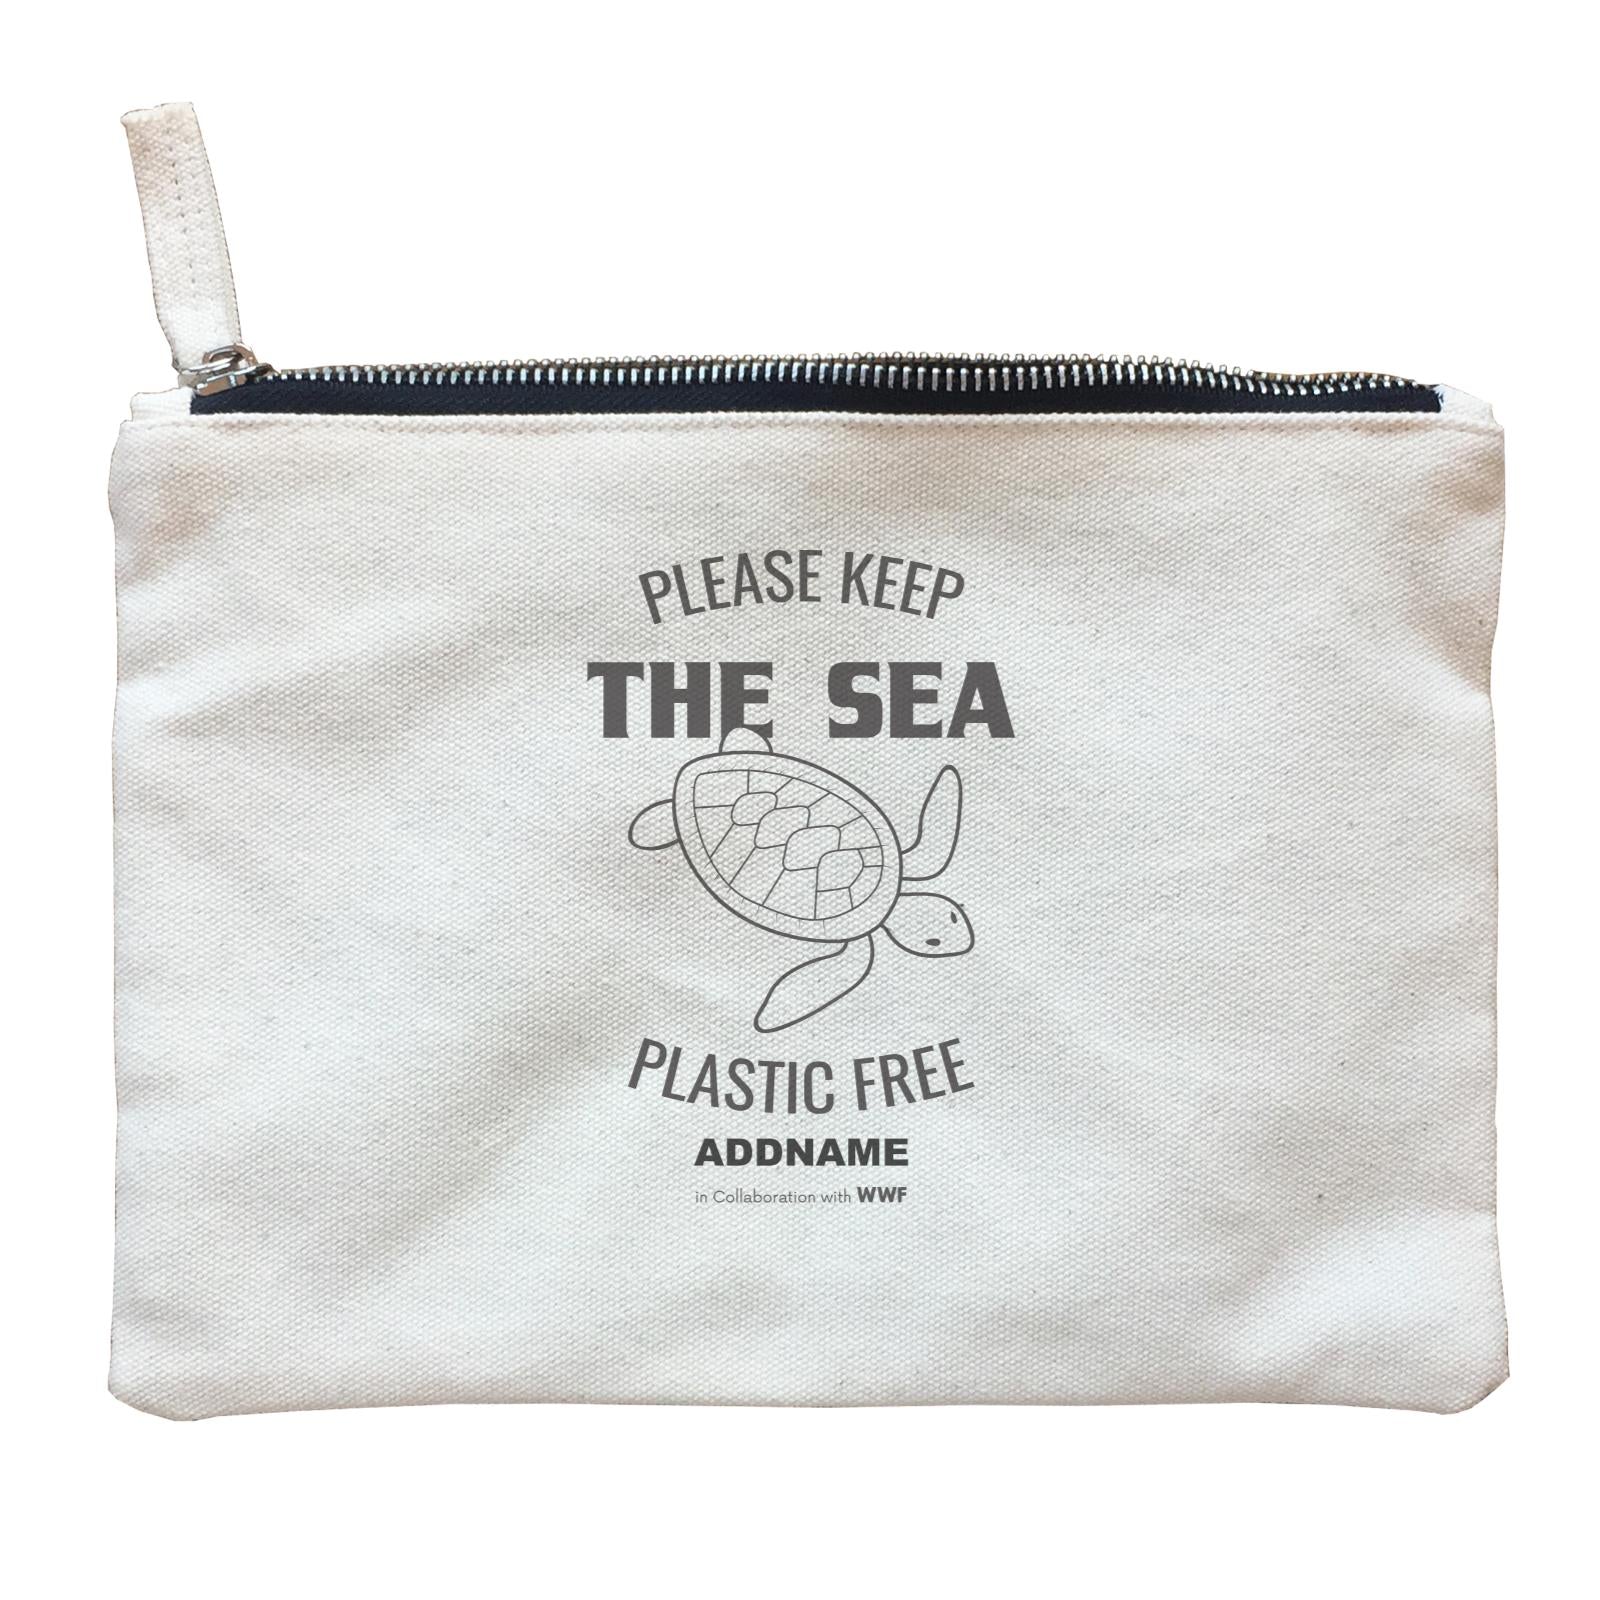 Please Keep The Sea Plastic Free Turtle Monochrome Addname Zipper Pouch